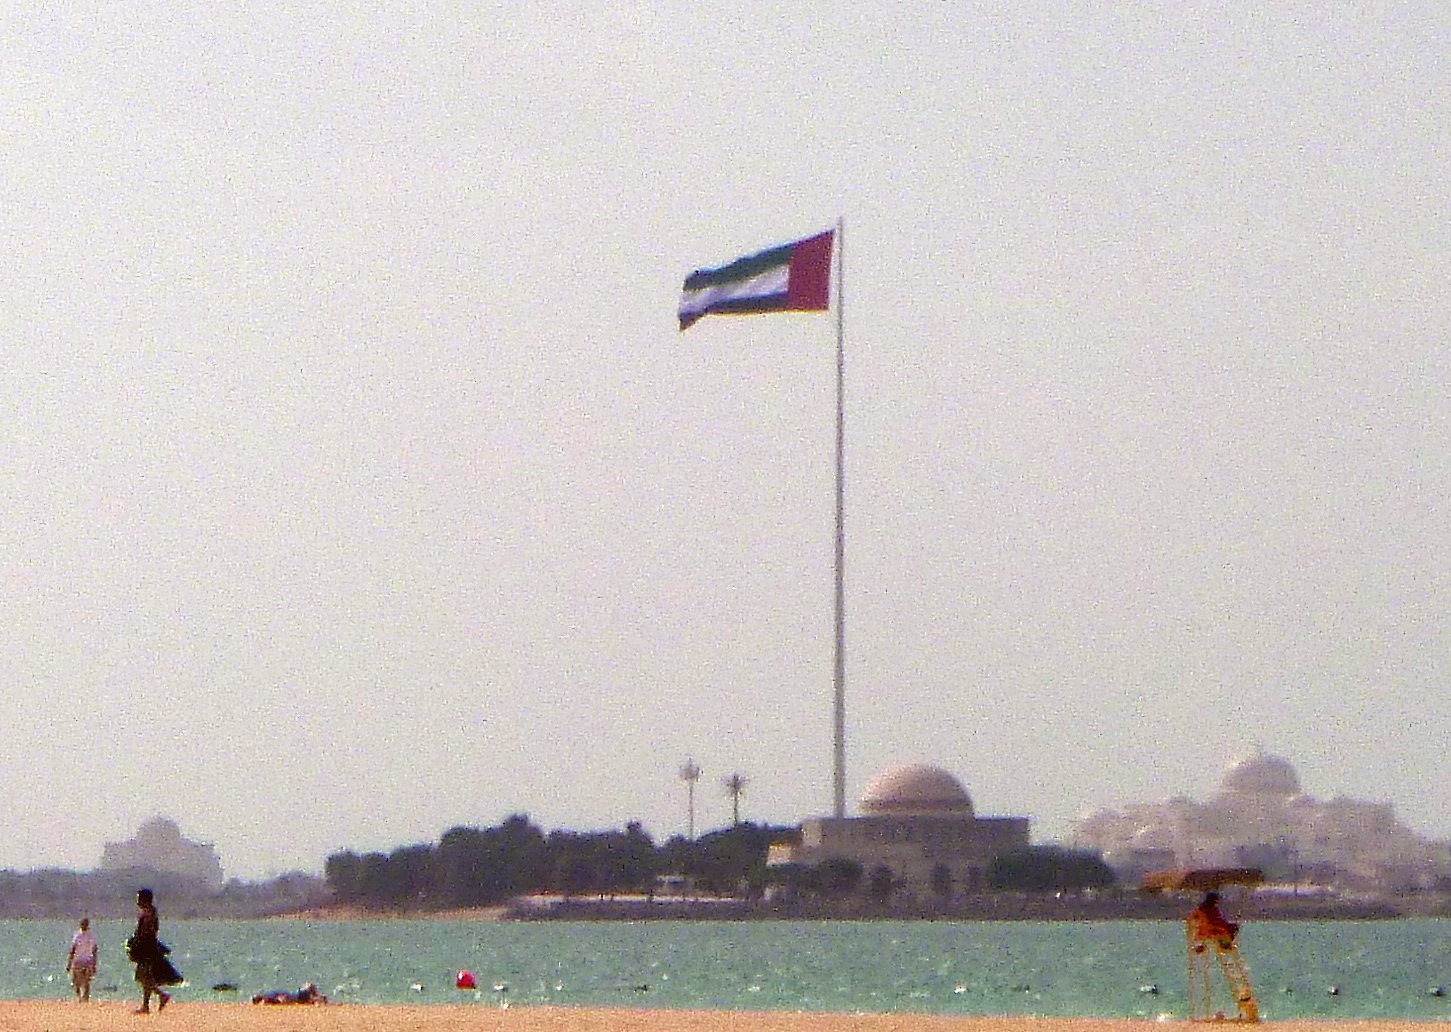 Giant Flagpole ans Abu Dhabi Theatre